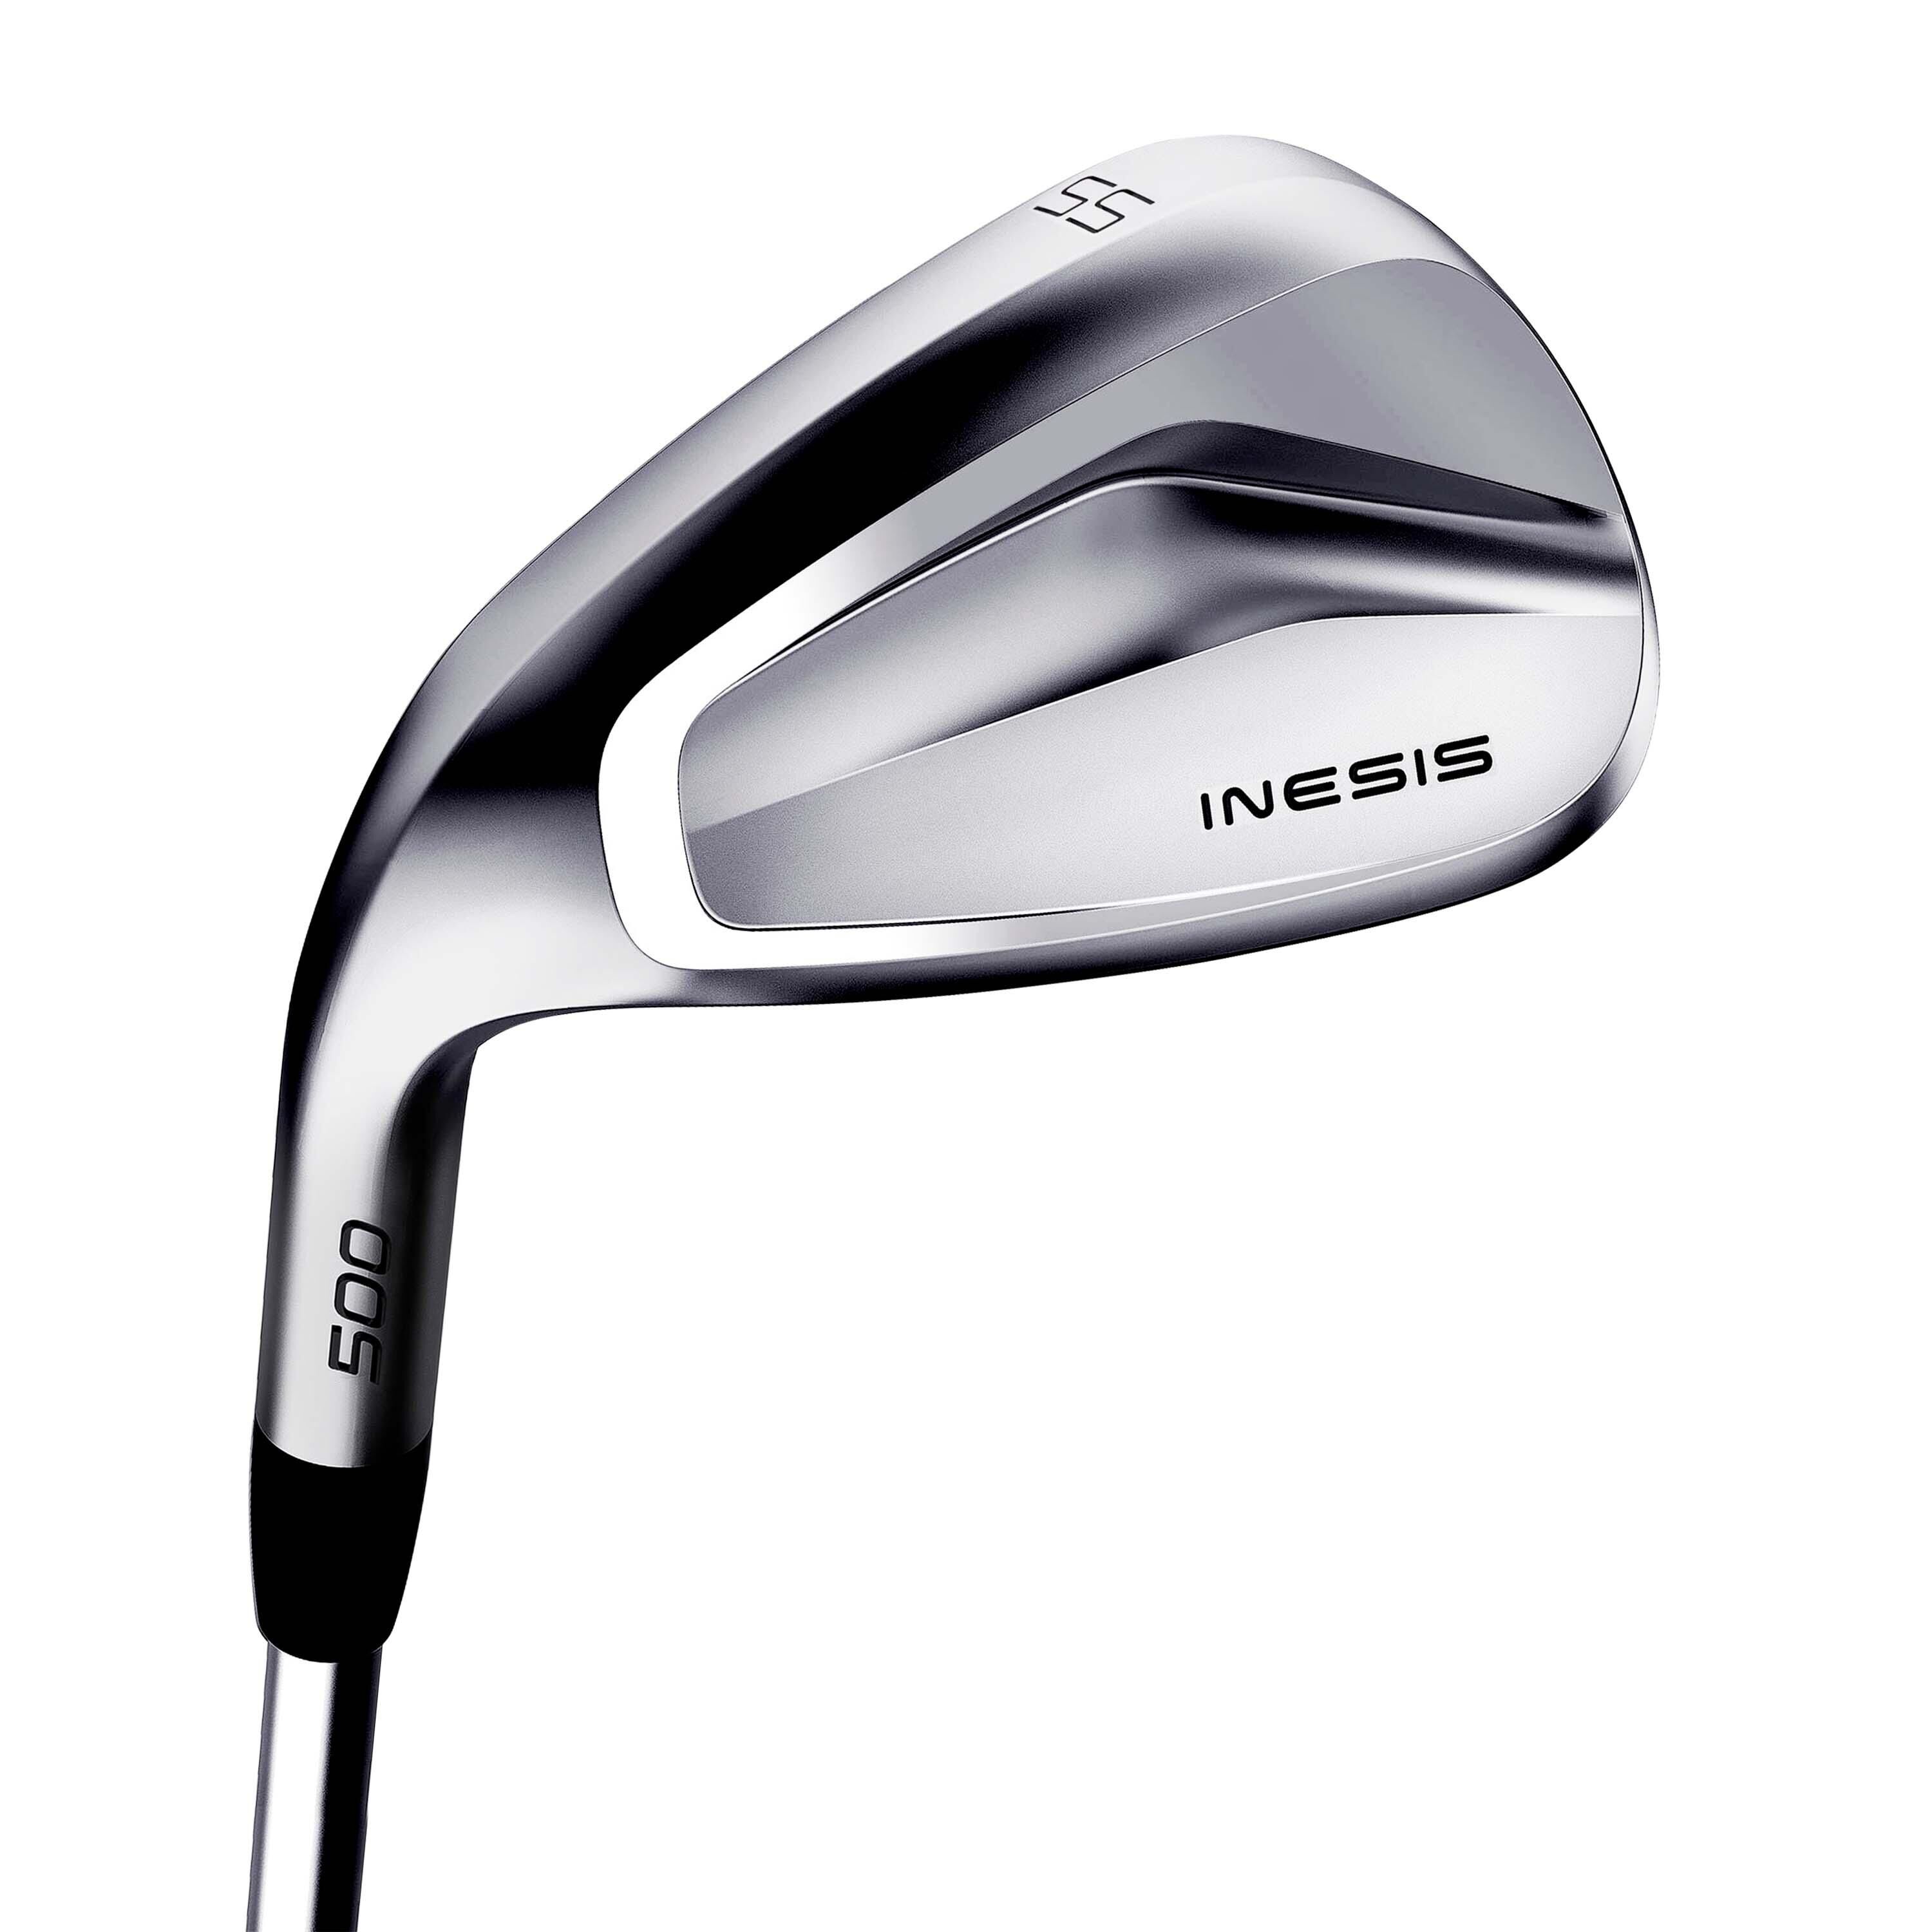 INESIS Golf wedge left-handed size 2 low speed - INESIS 500